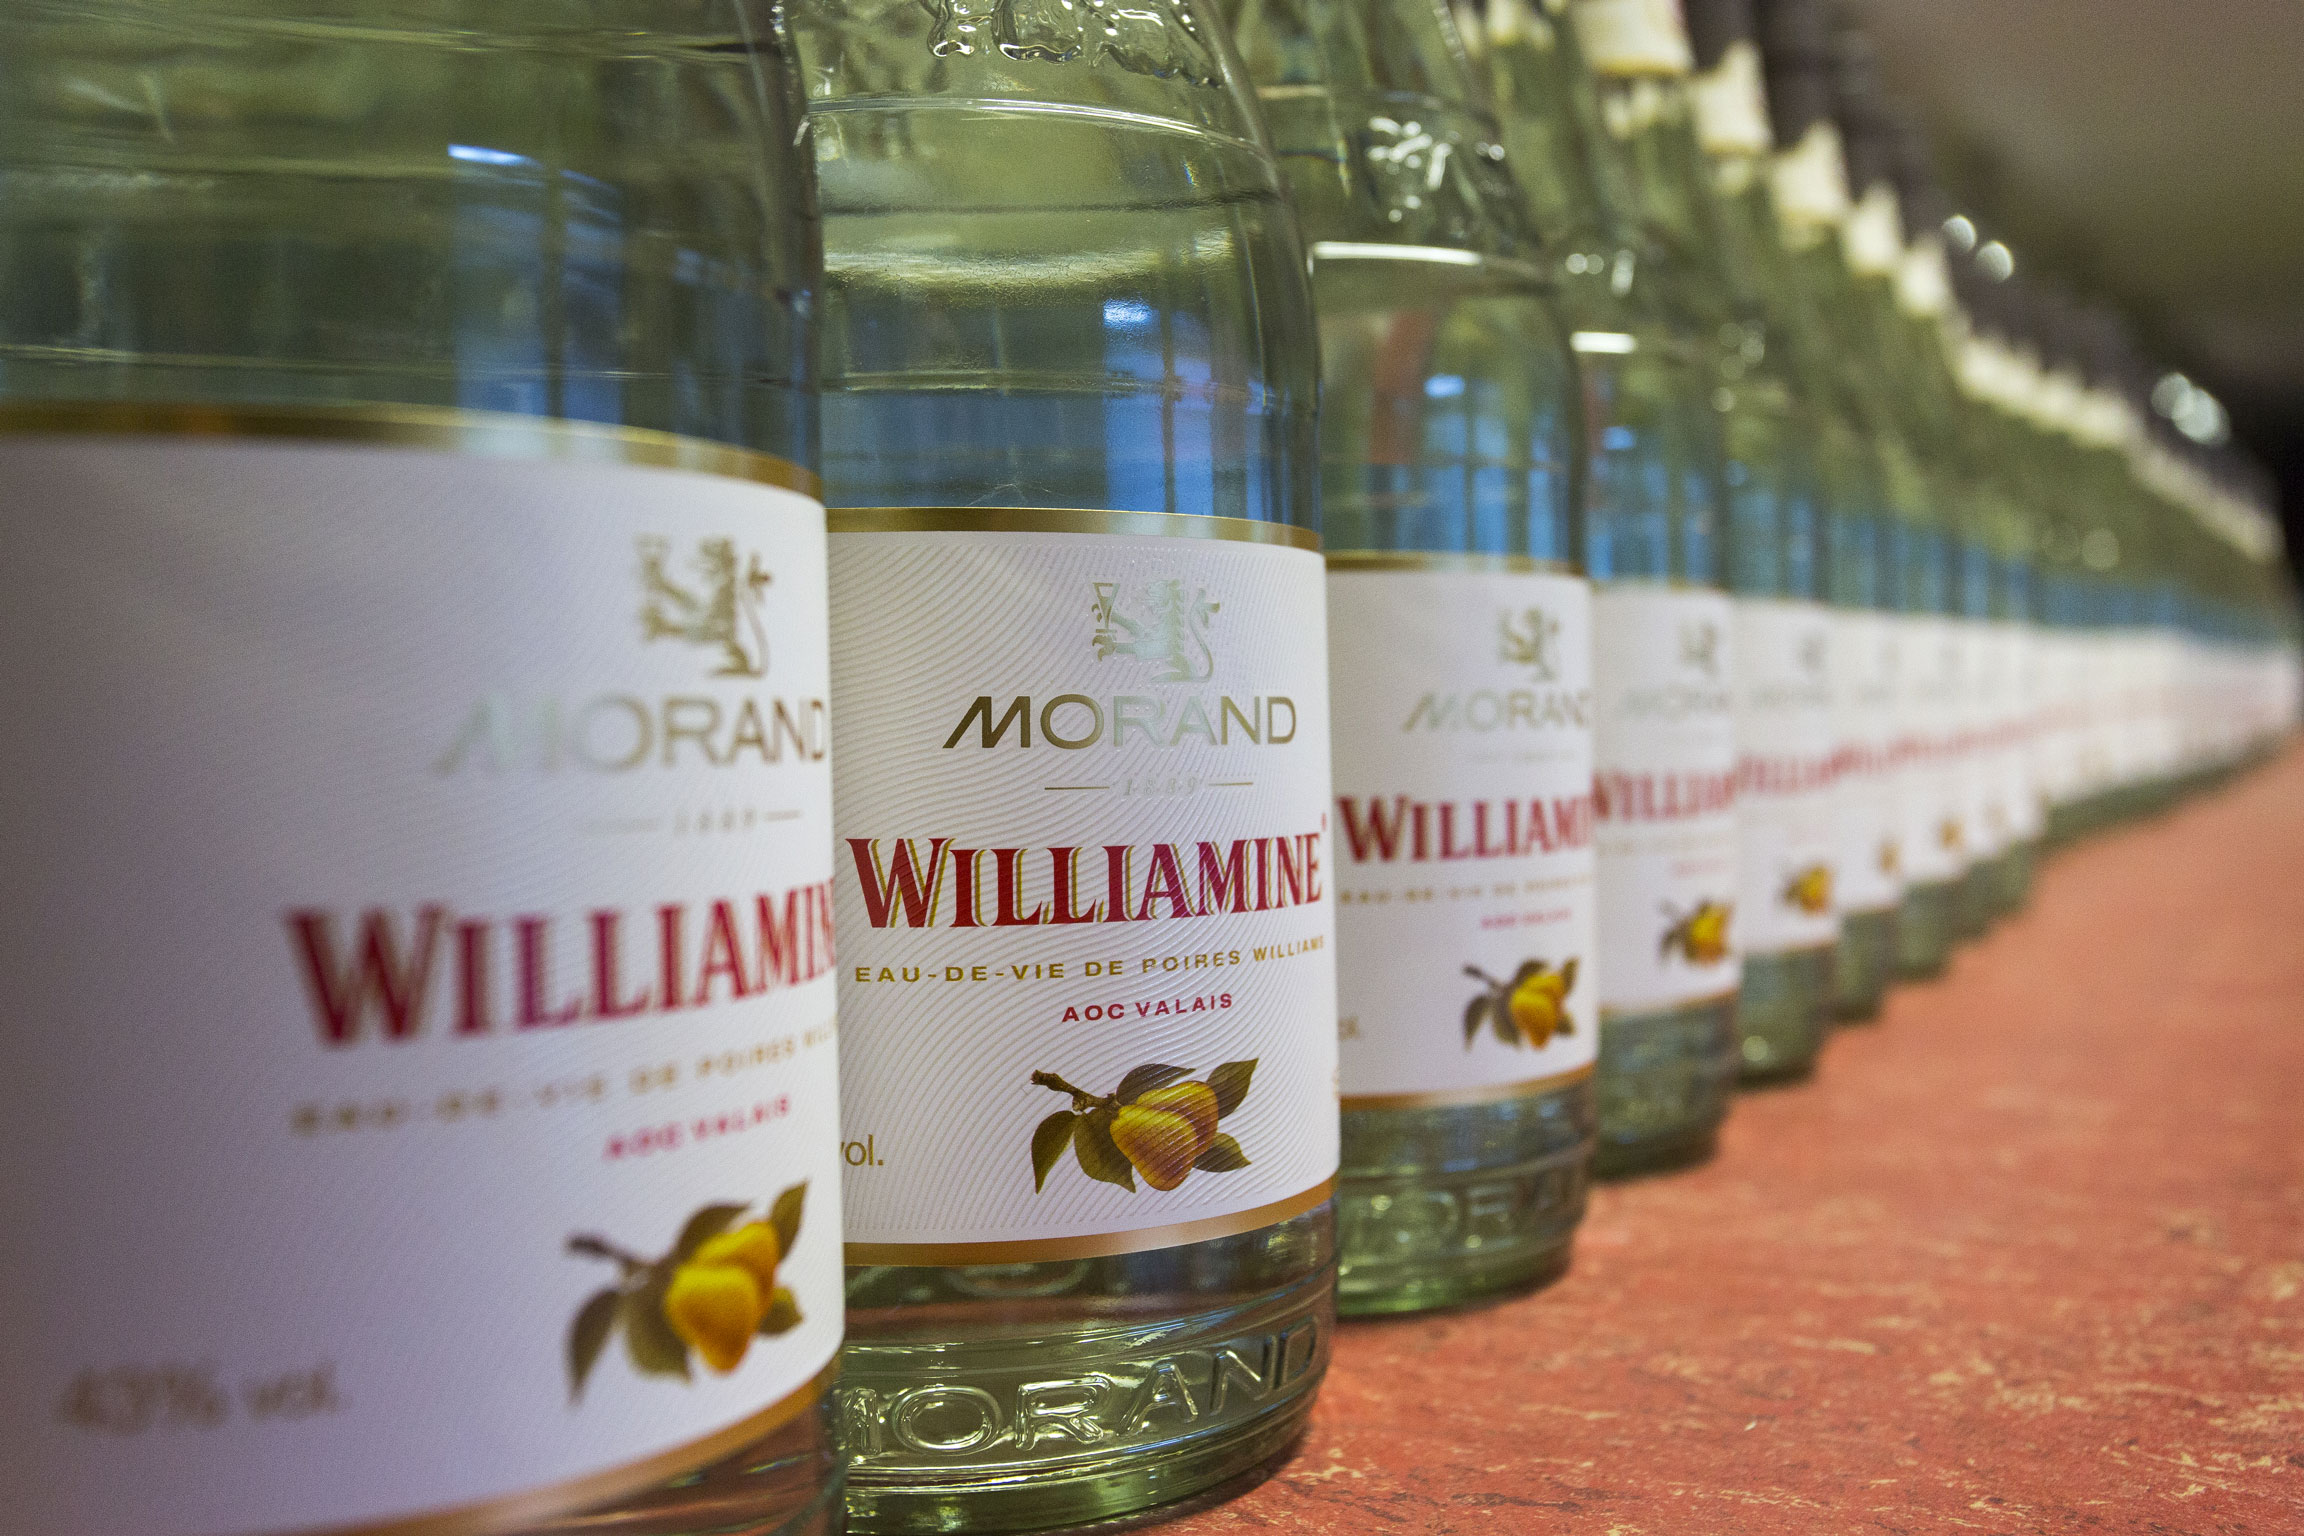 La célèbre Williamine de la Distillerie Morand Williamine - Crédit photo : R. Hofer